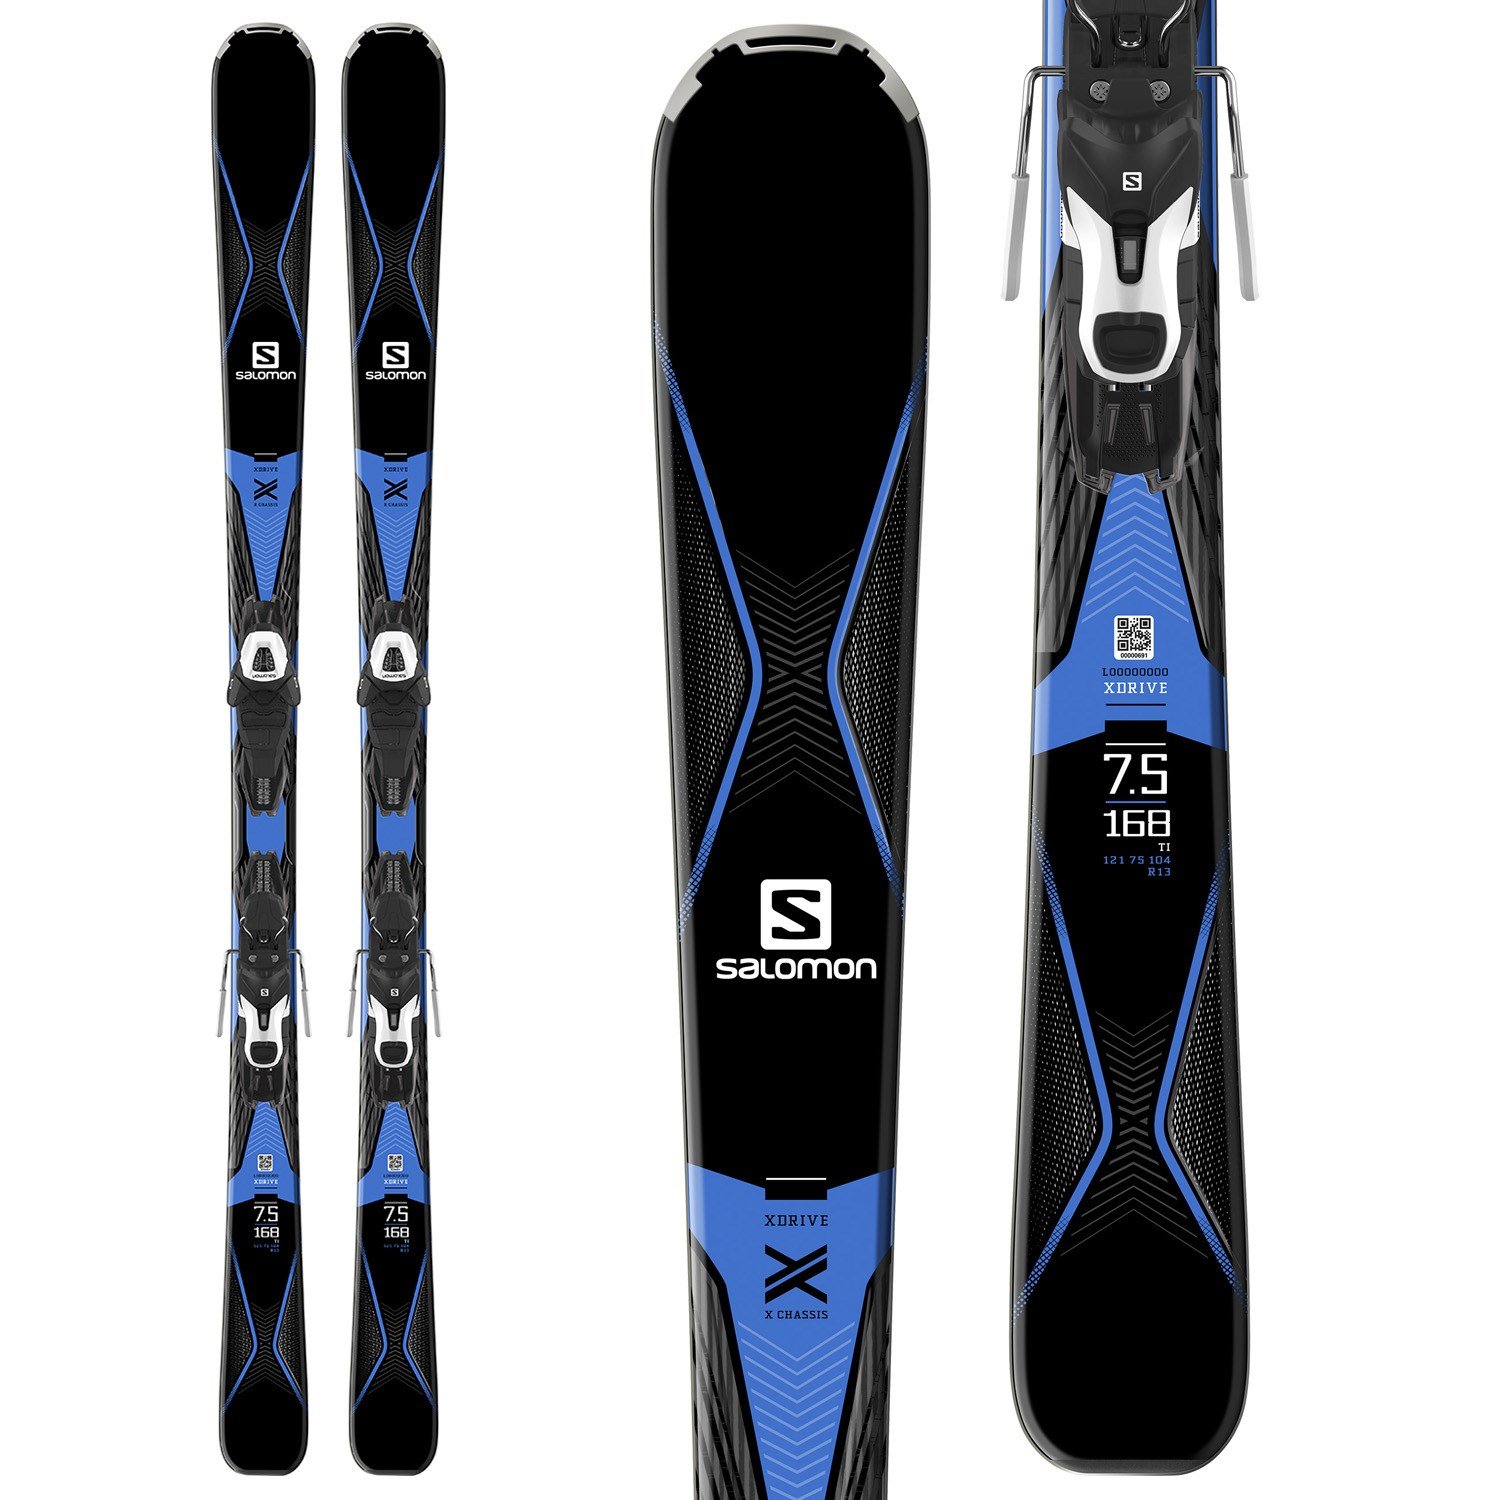 Salomon X-Drive 7.5 Skis + E Lithium 10 Bindings - Women's 2017 evo